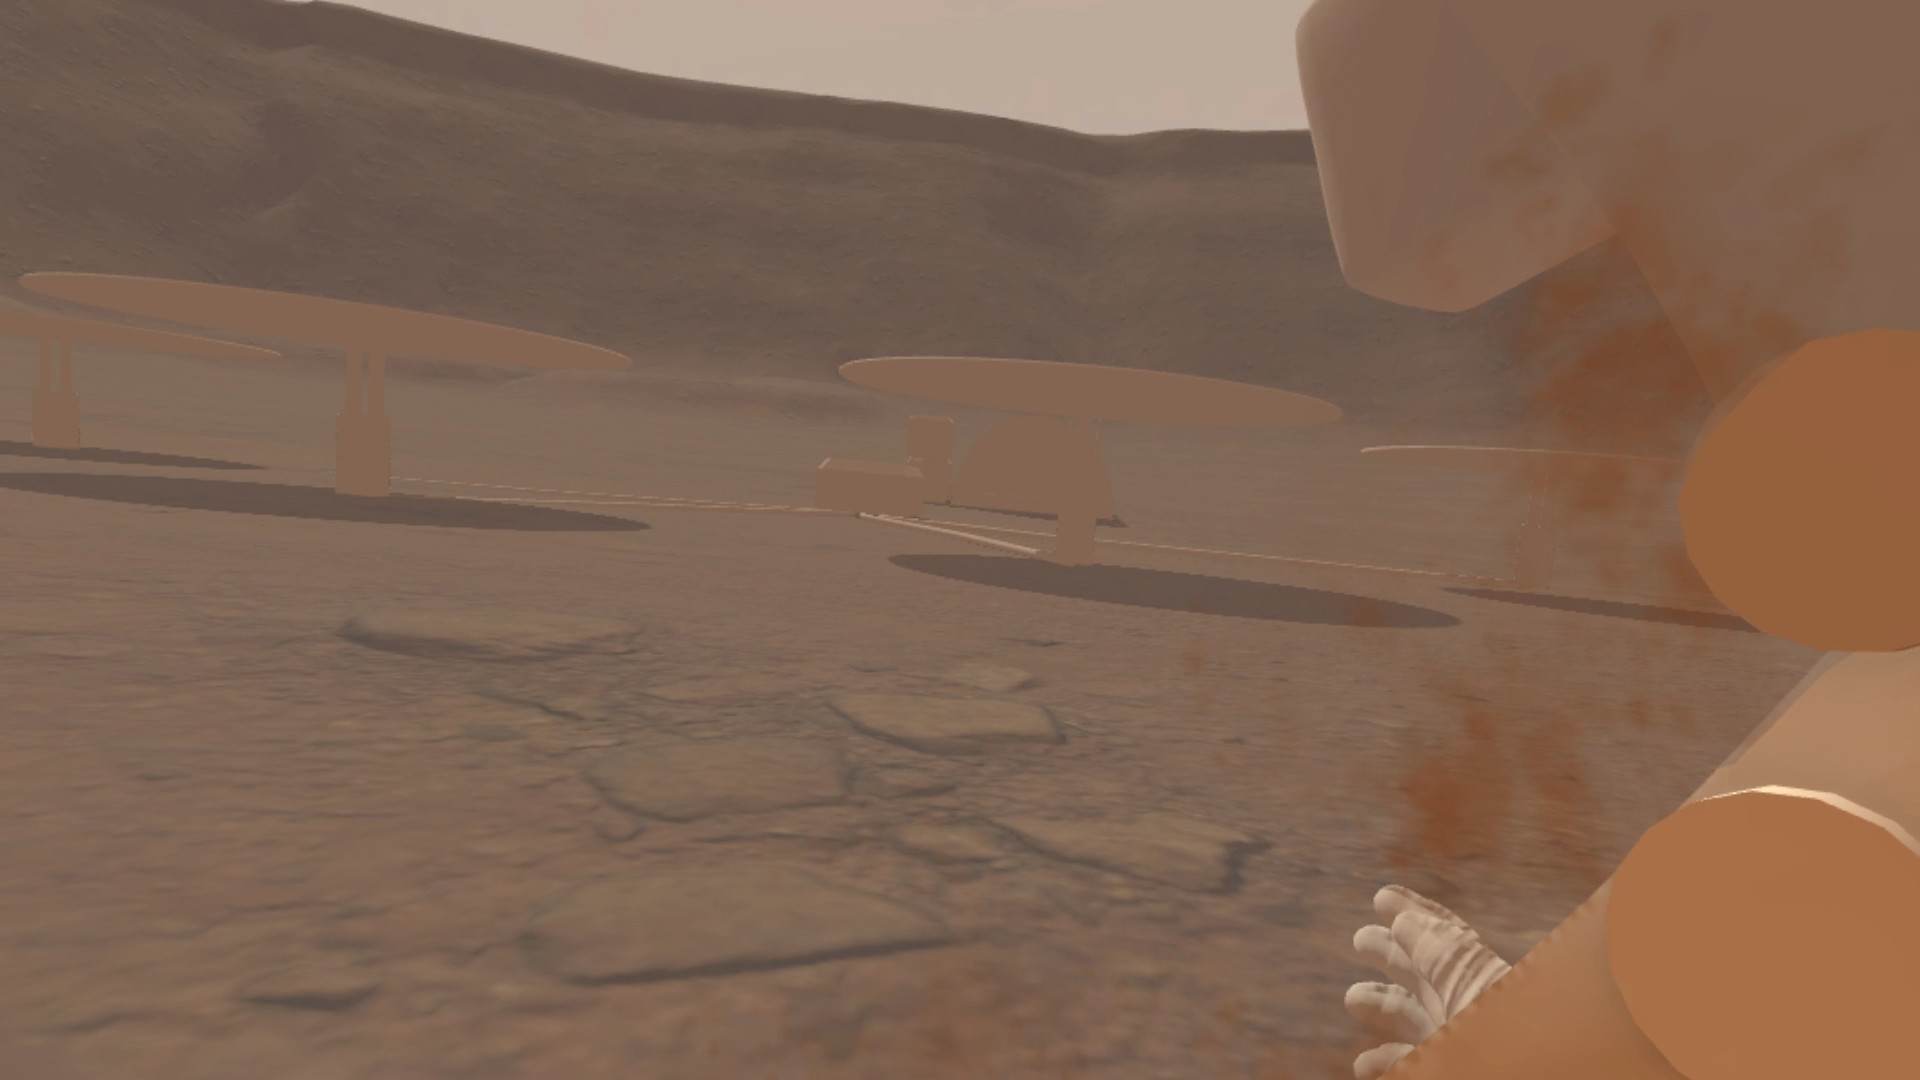 Mars City screenshot